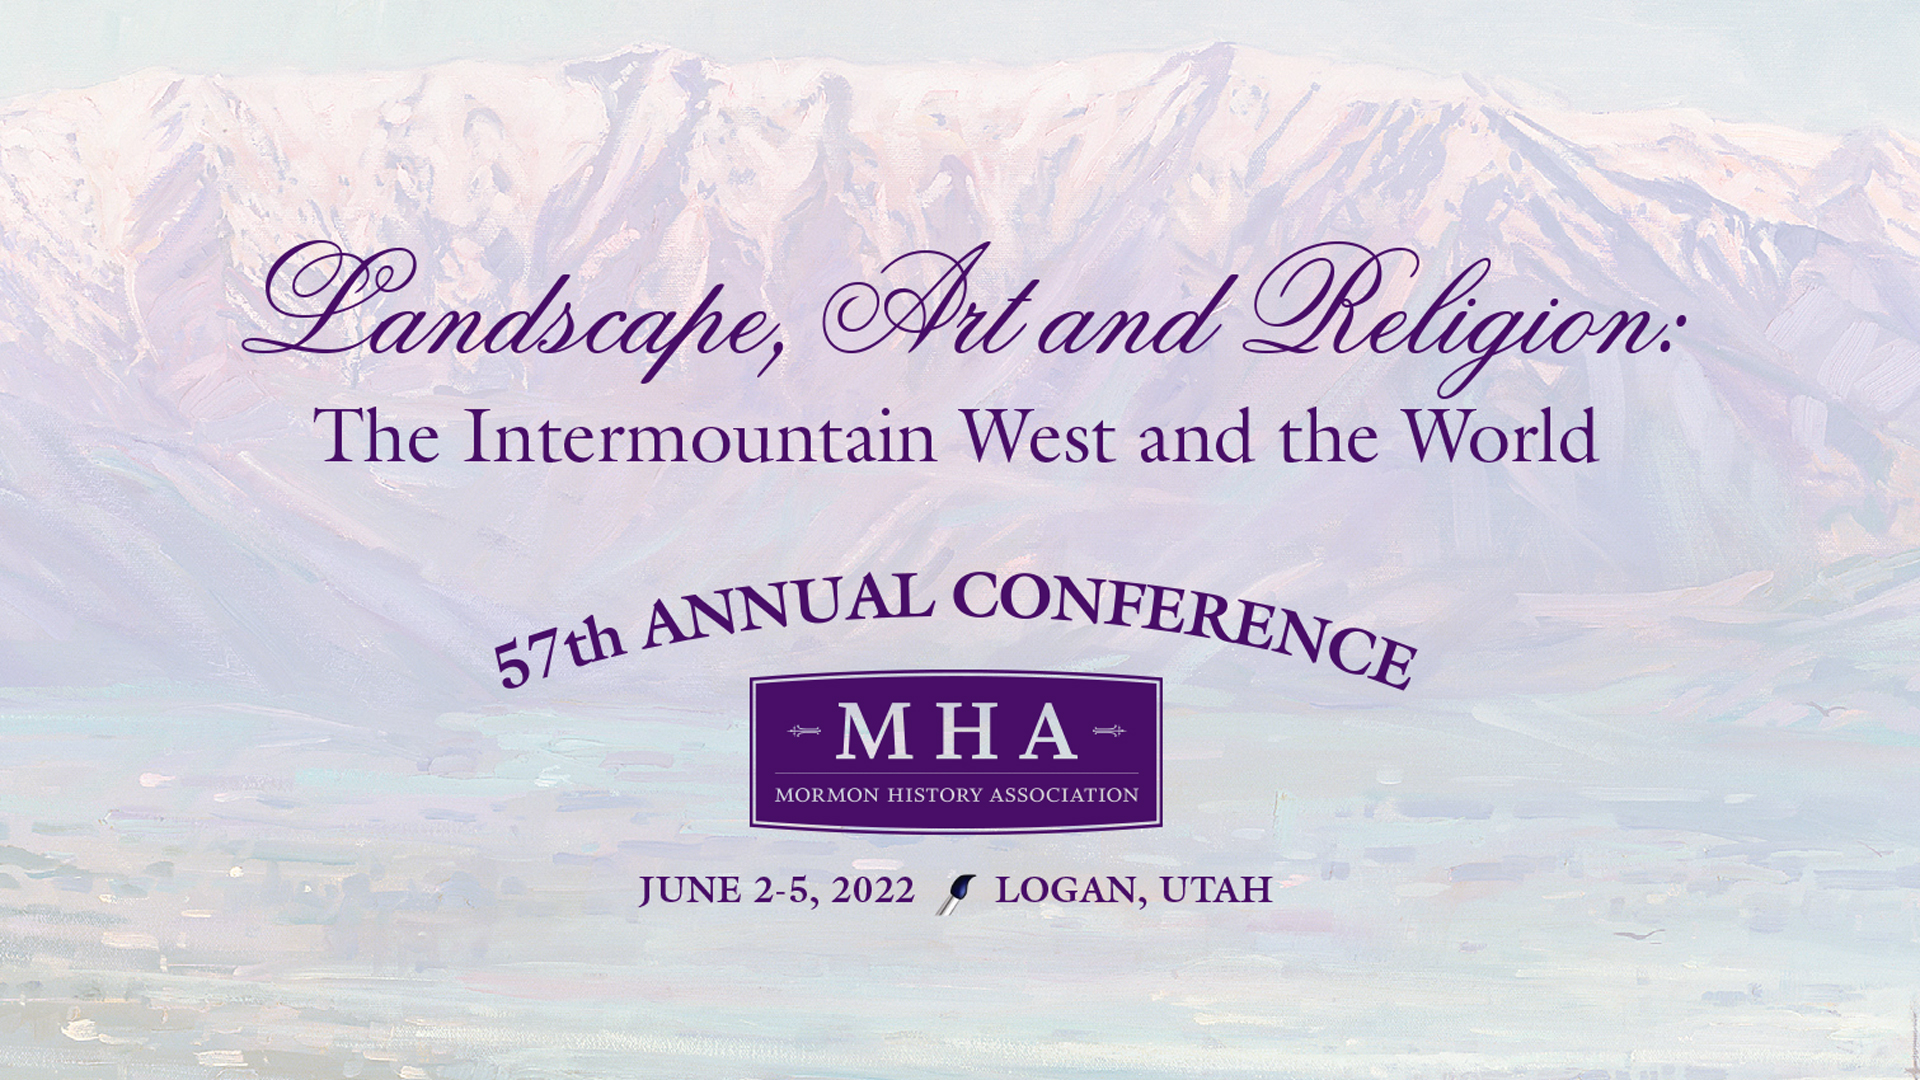 MHA Conference Banner 2022 Landscape Art and Religion MHA Mormon History Association